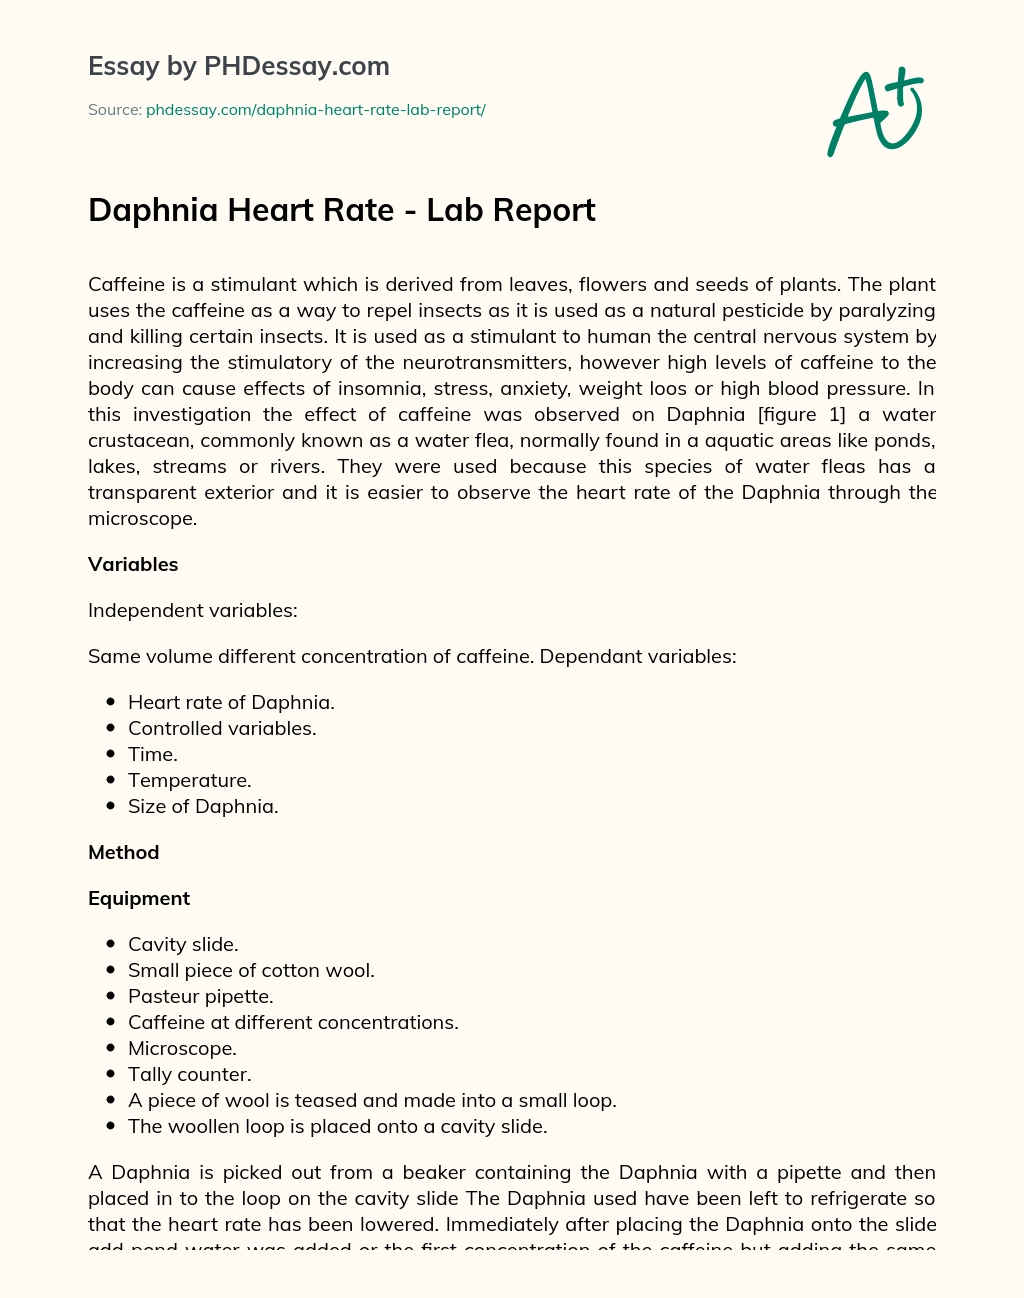 Daphnia Heart Rate – Lab Report essay